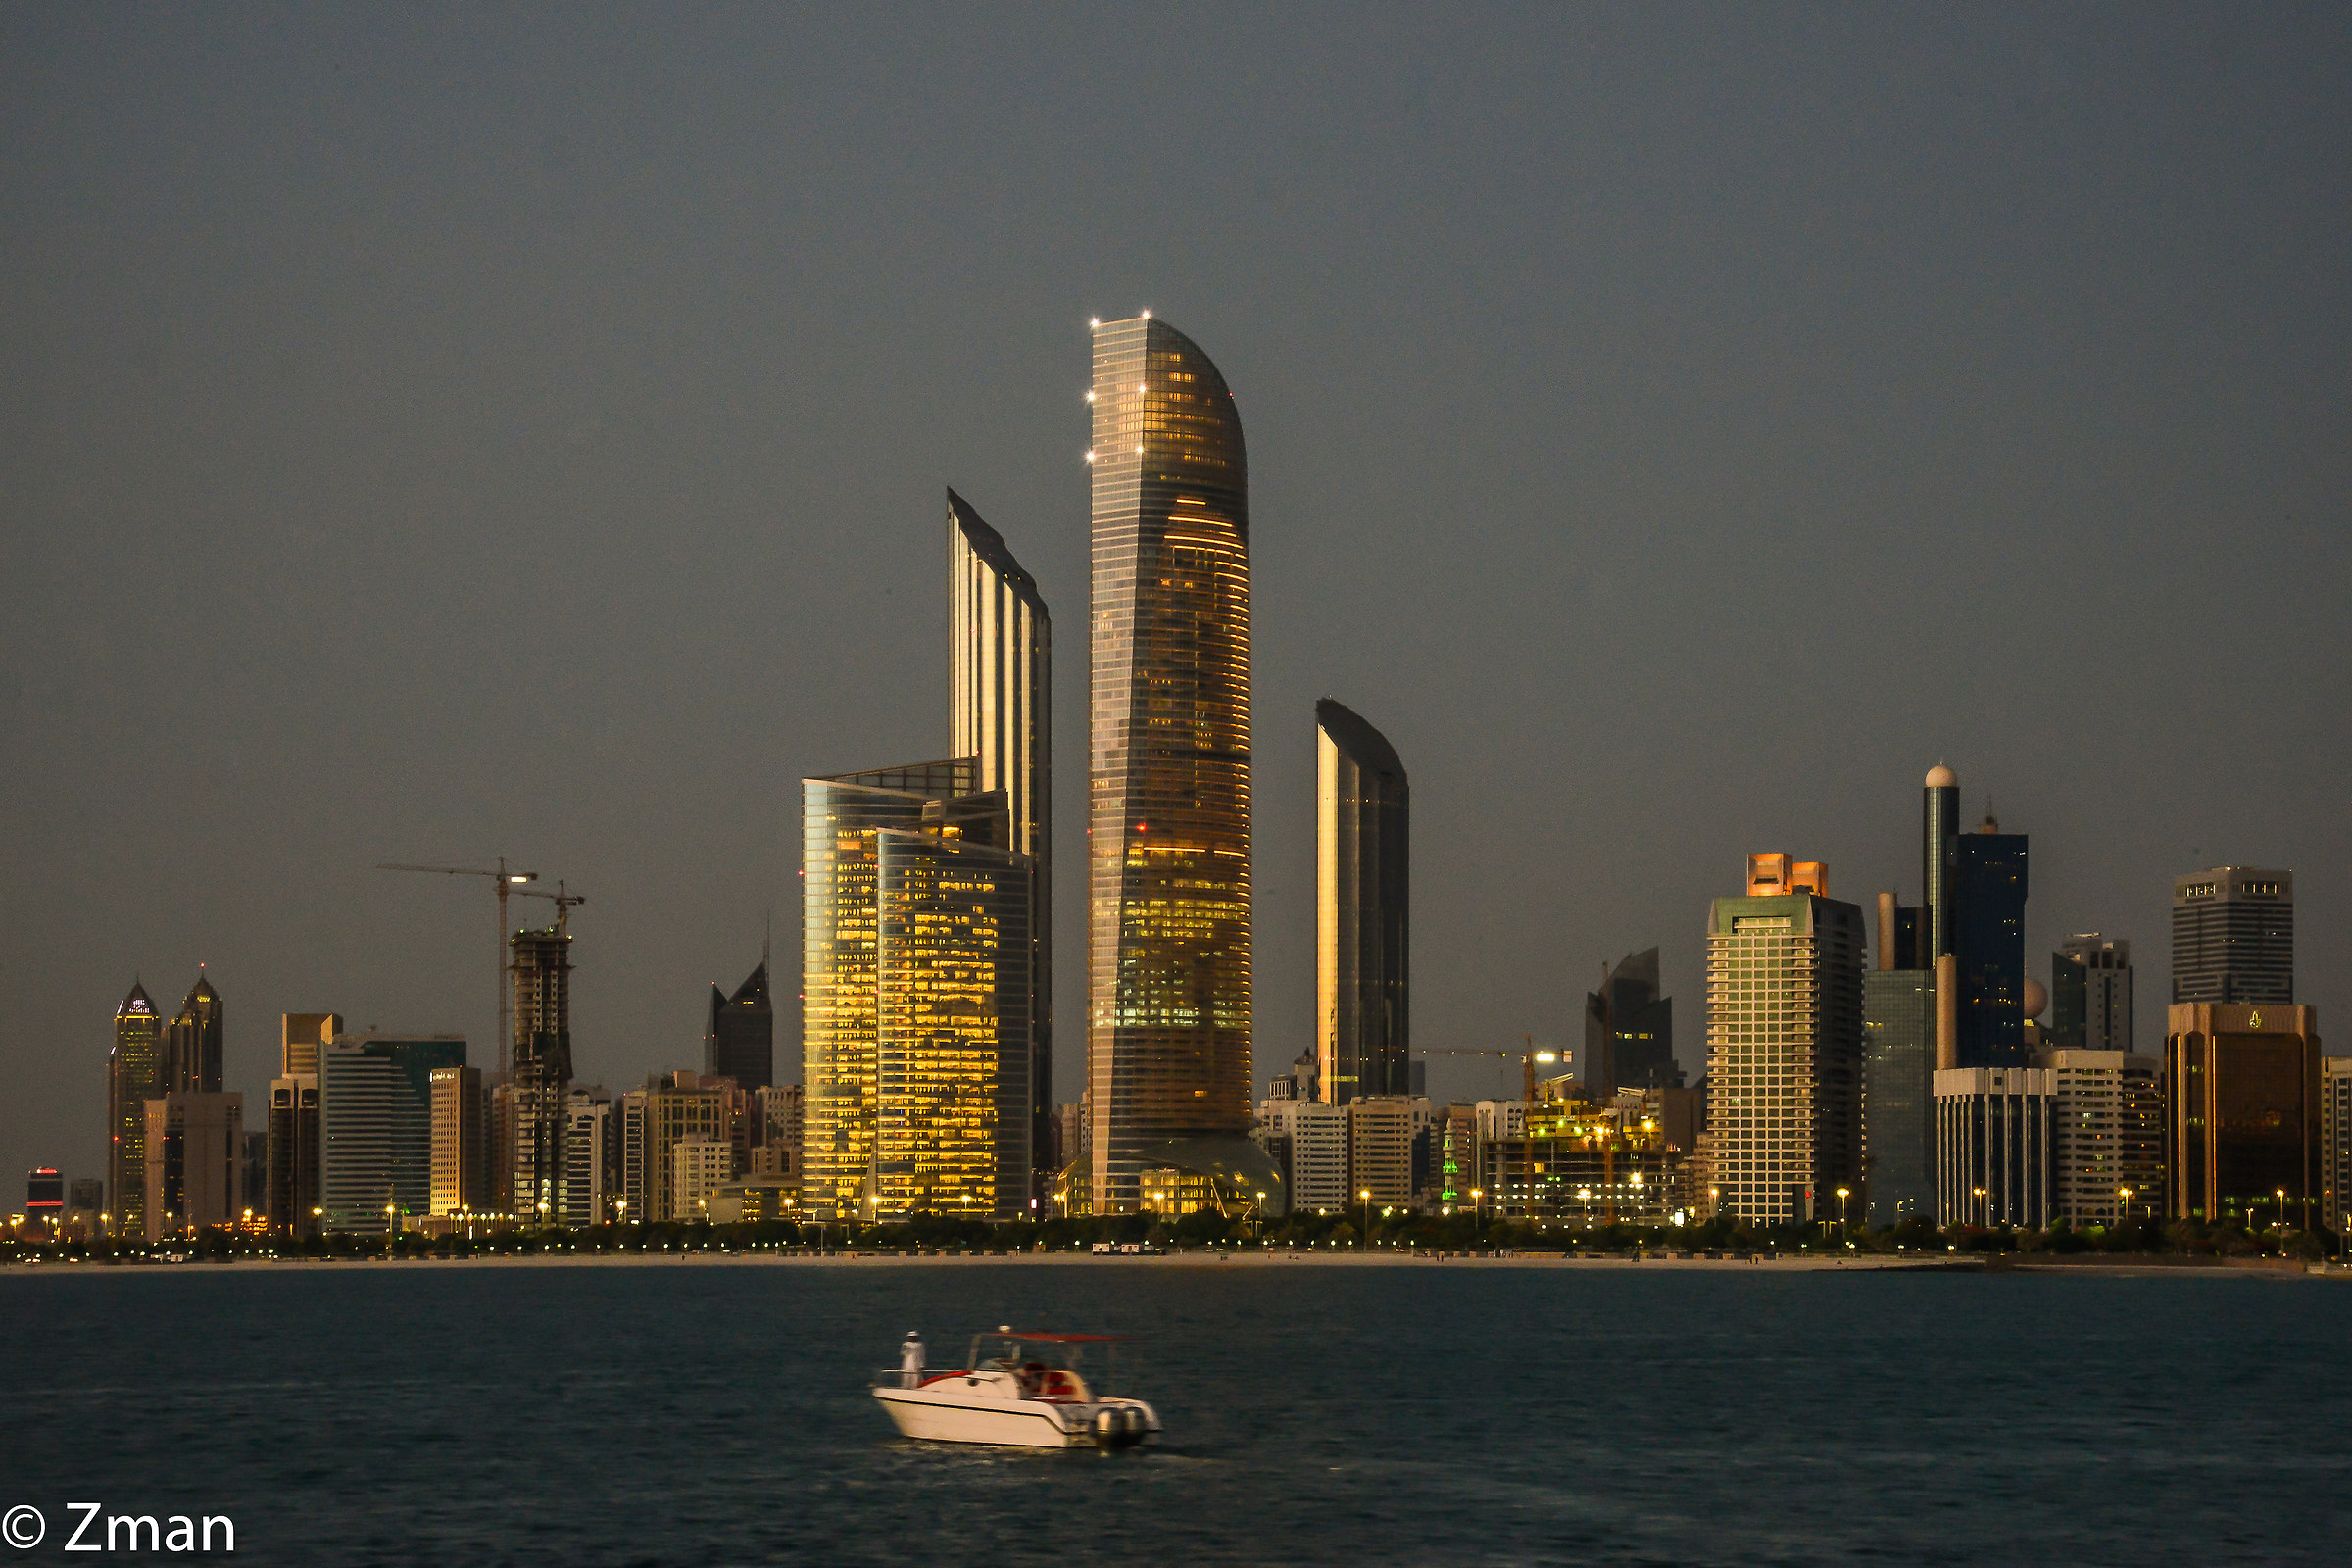 Abu Dhabi Corniche Developments...